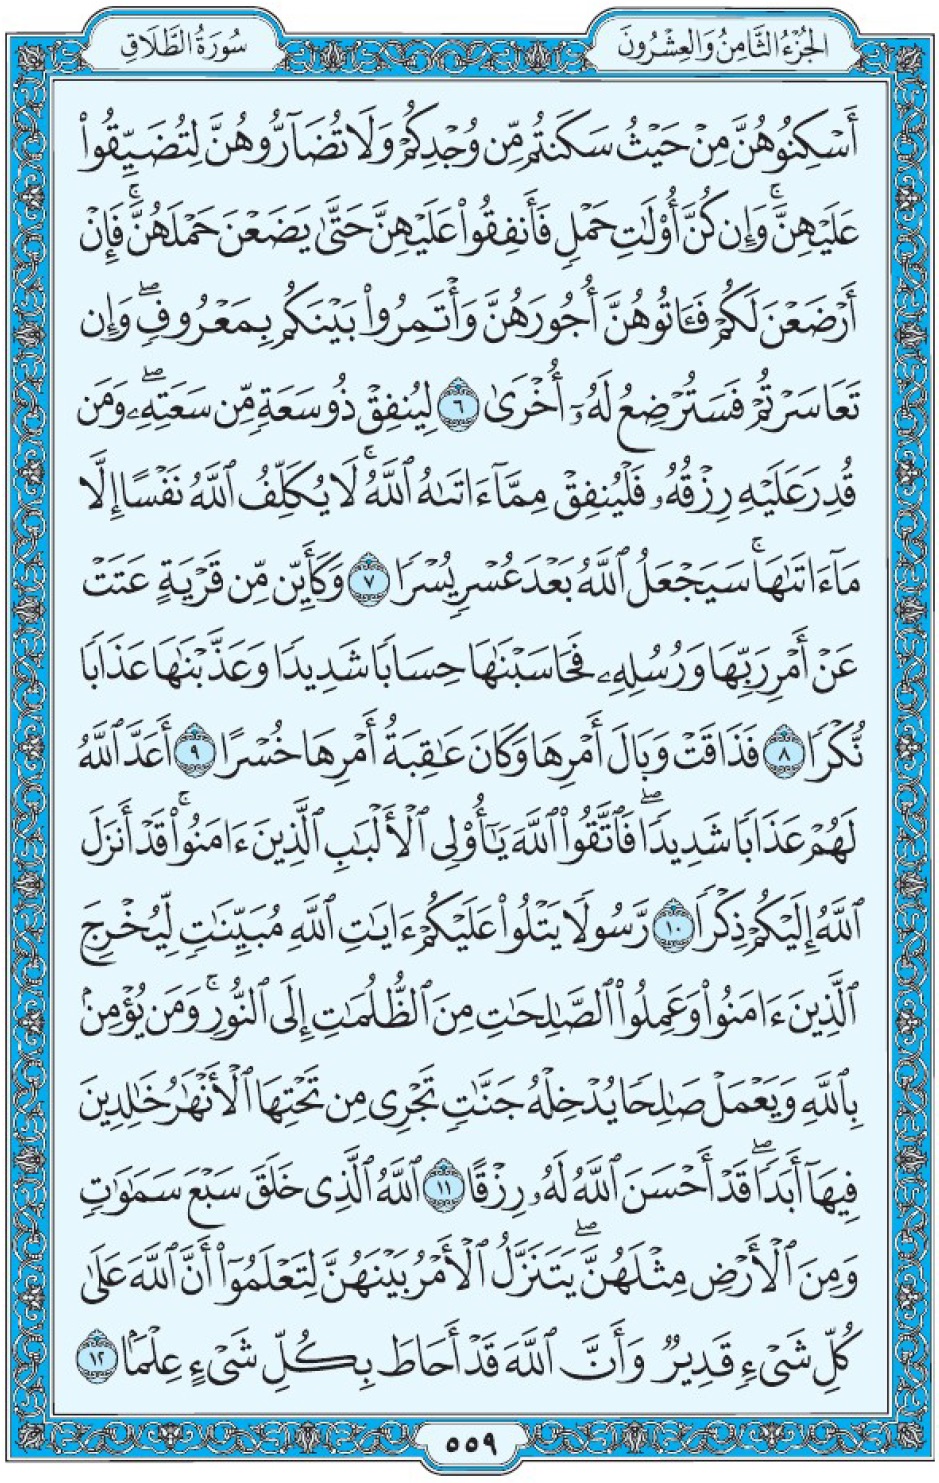 Коран Мединский мусхаф страница 559, ат-Таляк, аят 6-12